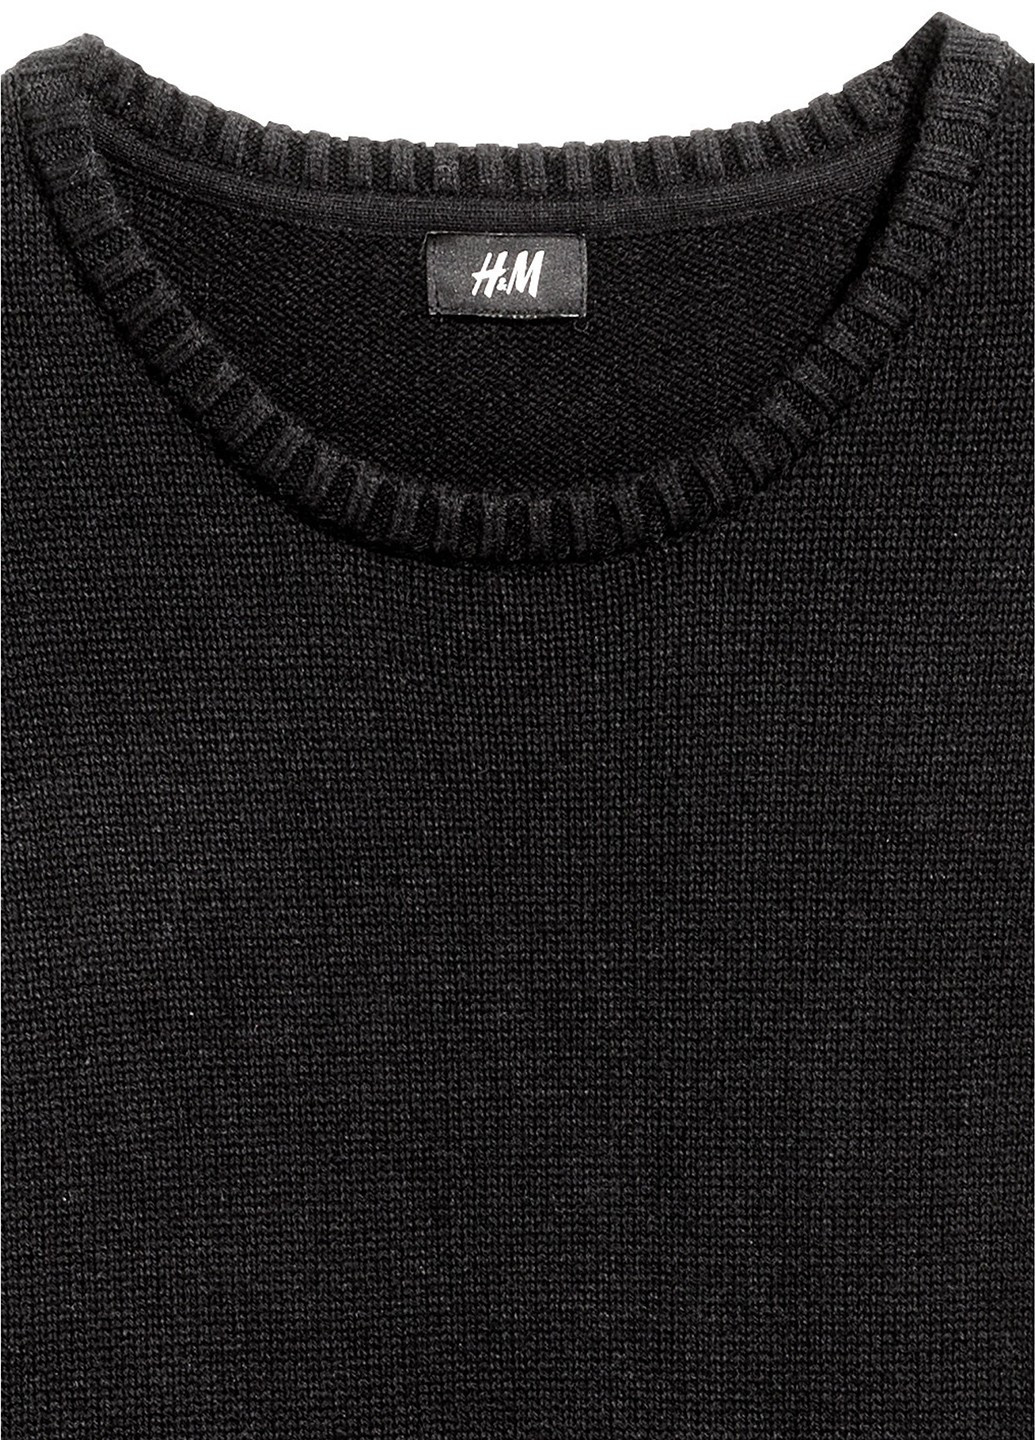 Черный зимний джемпер джемпер H&M